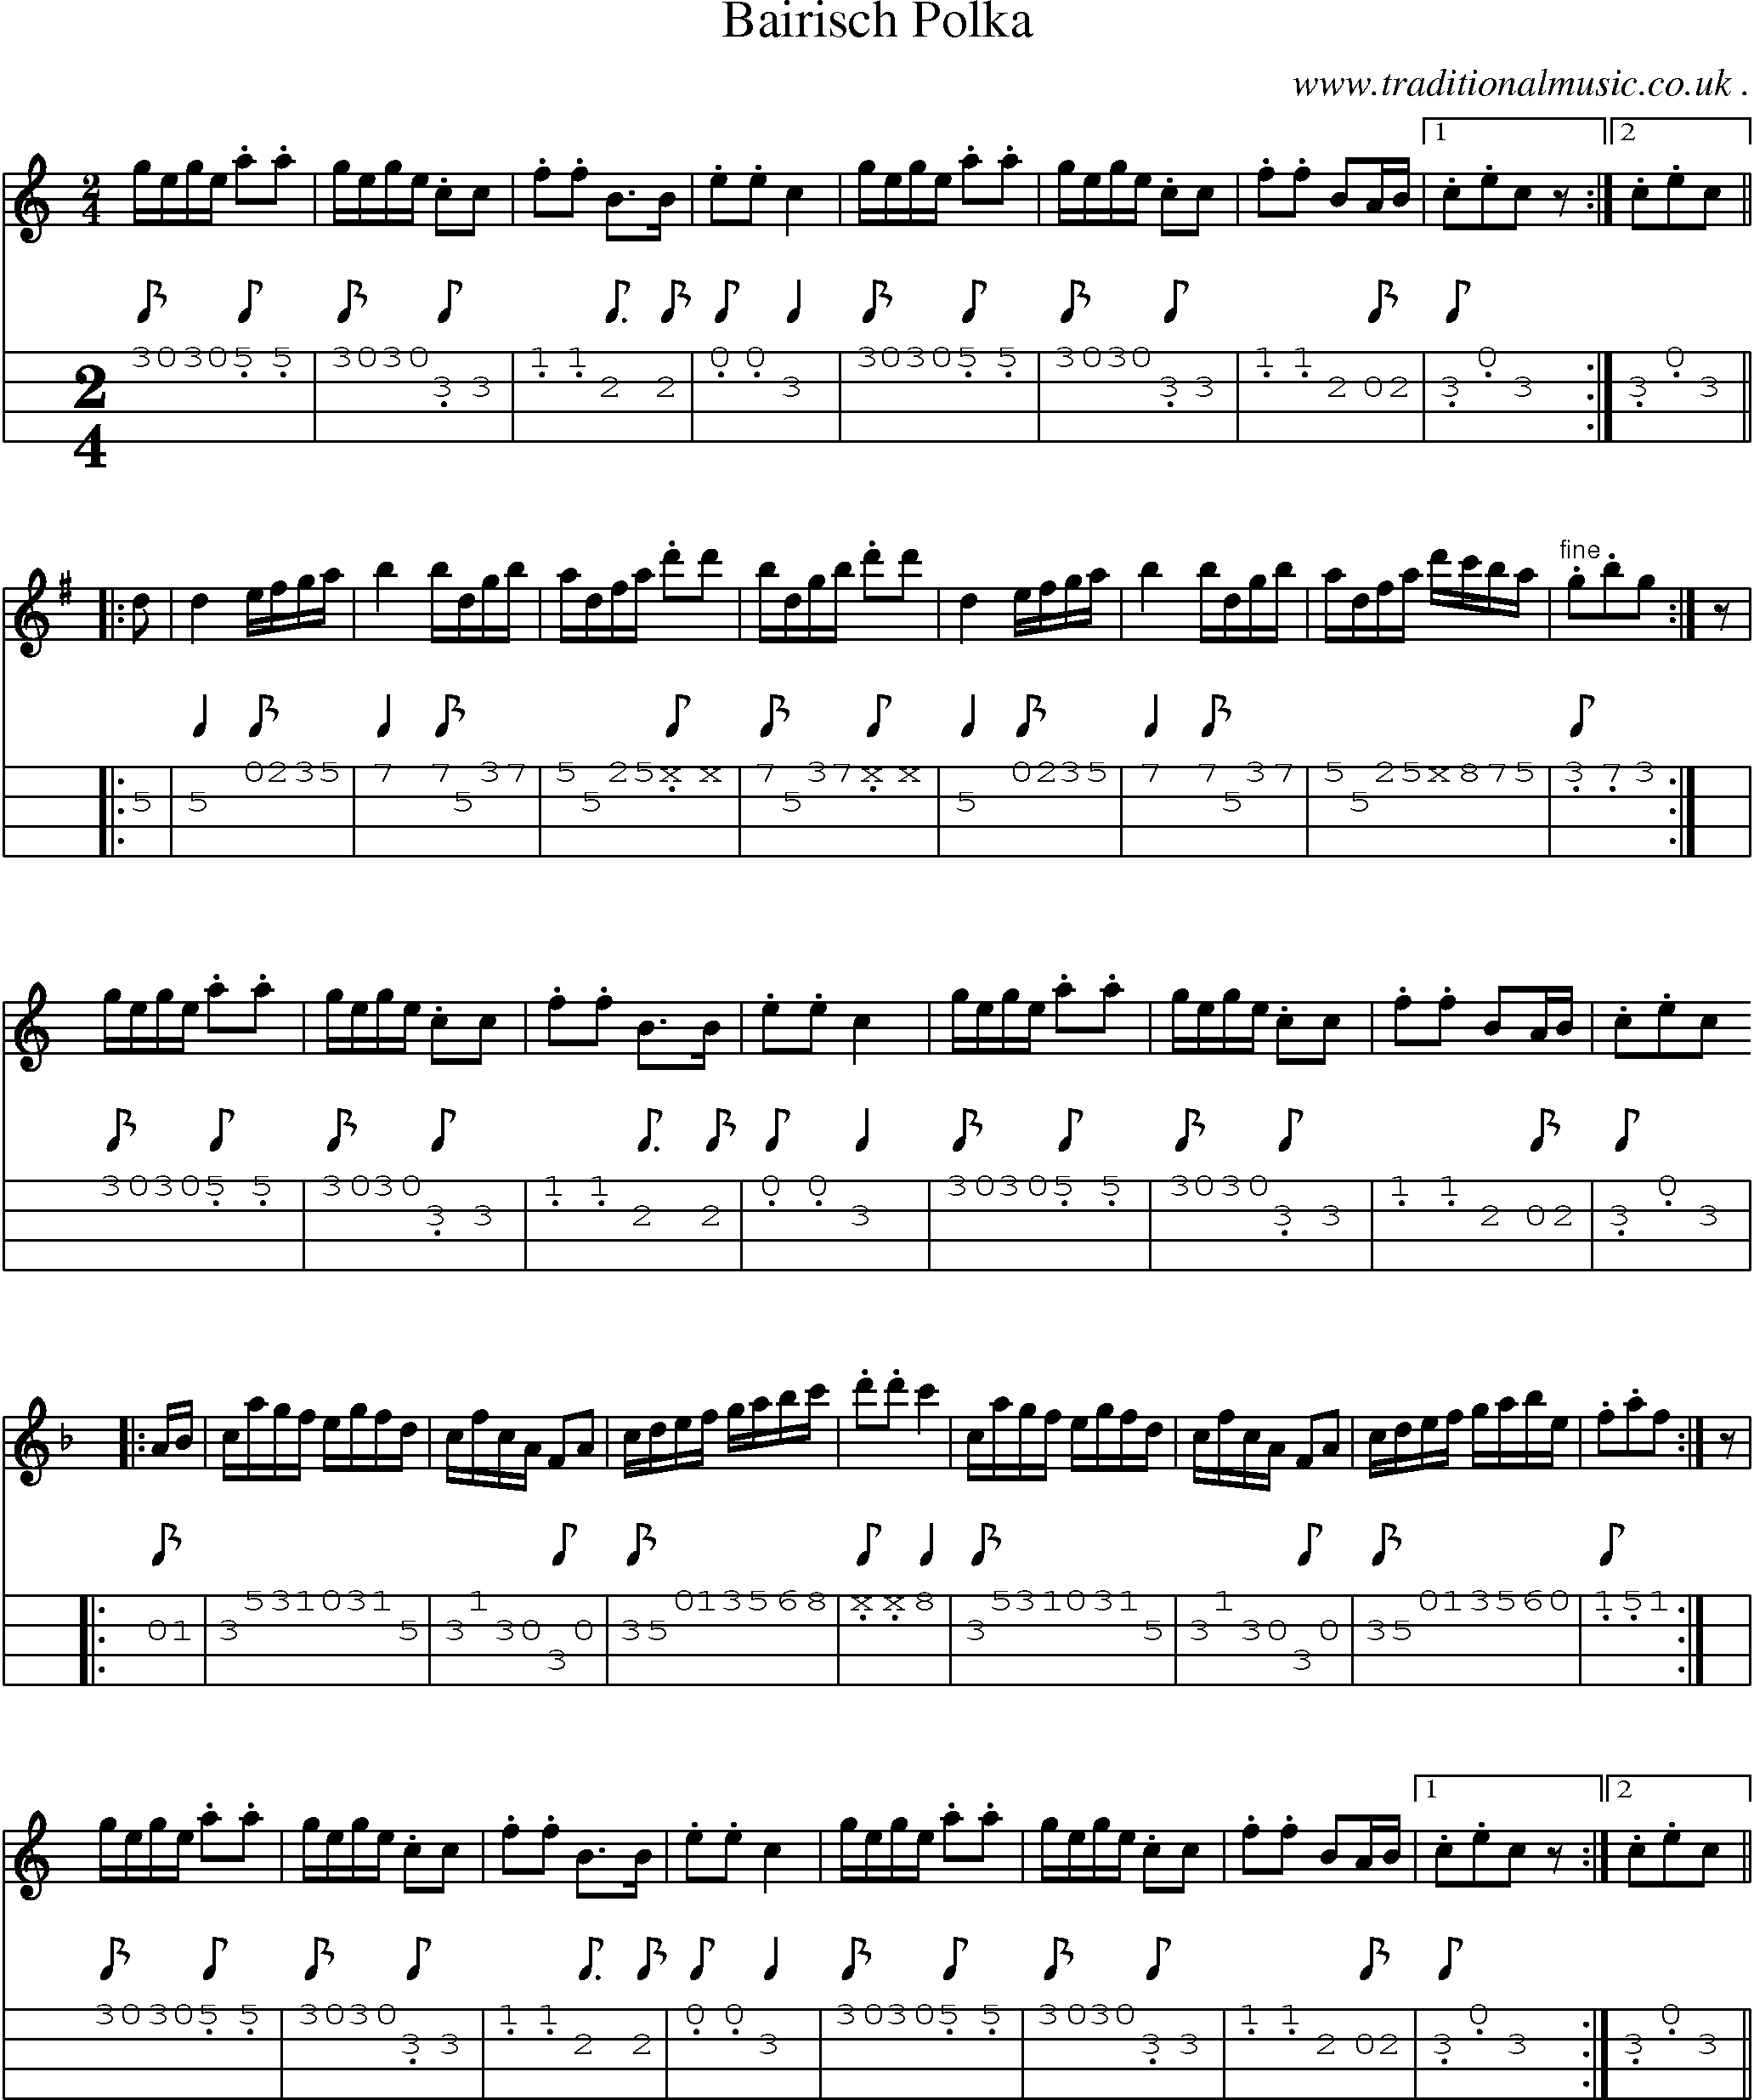 Sheet-Music and Mandolin Tabs for Bairisch Polka